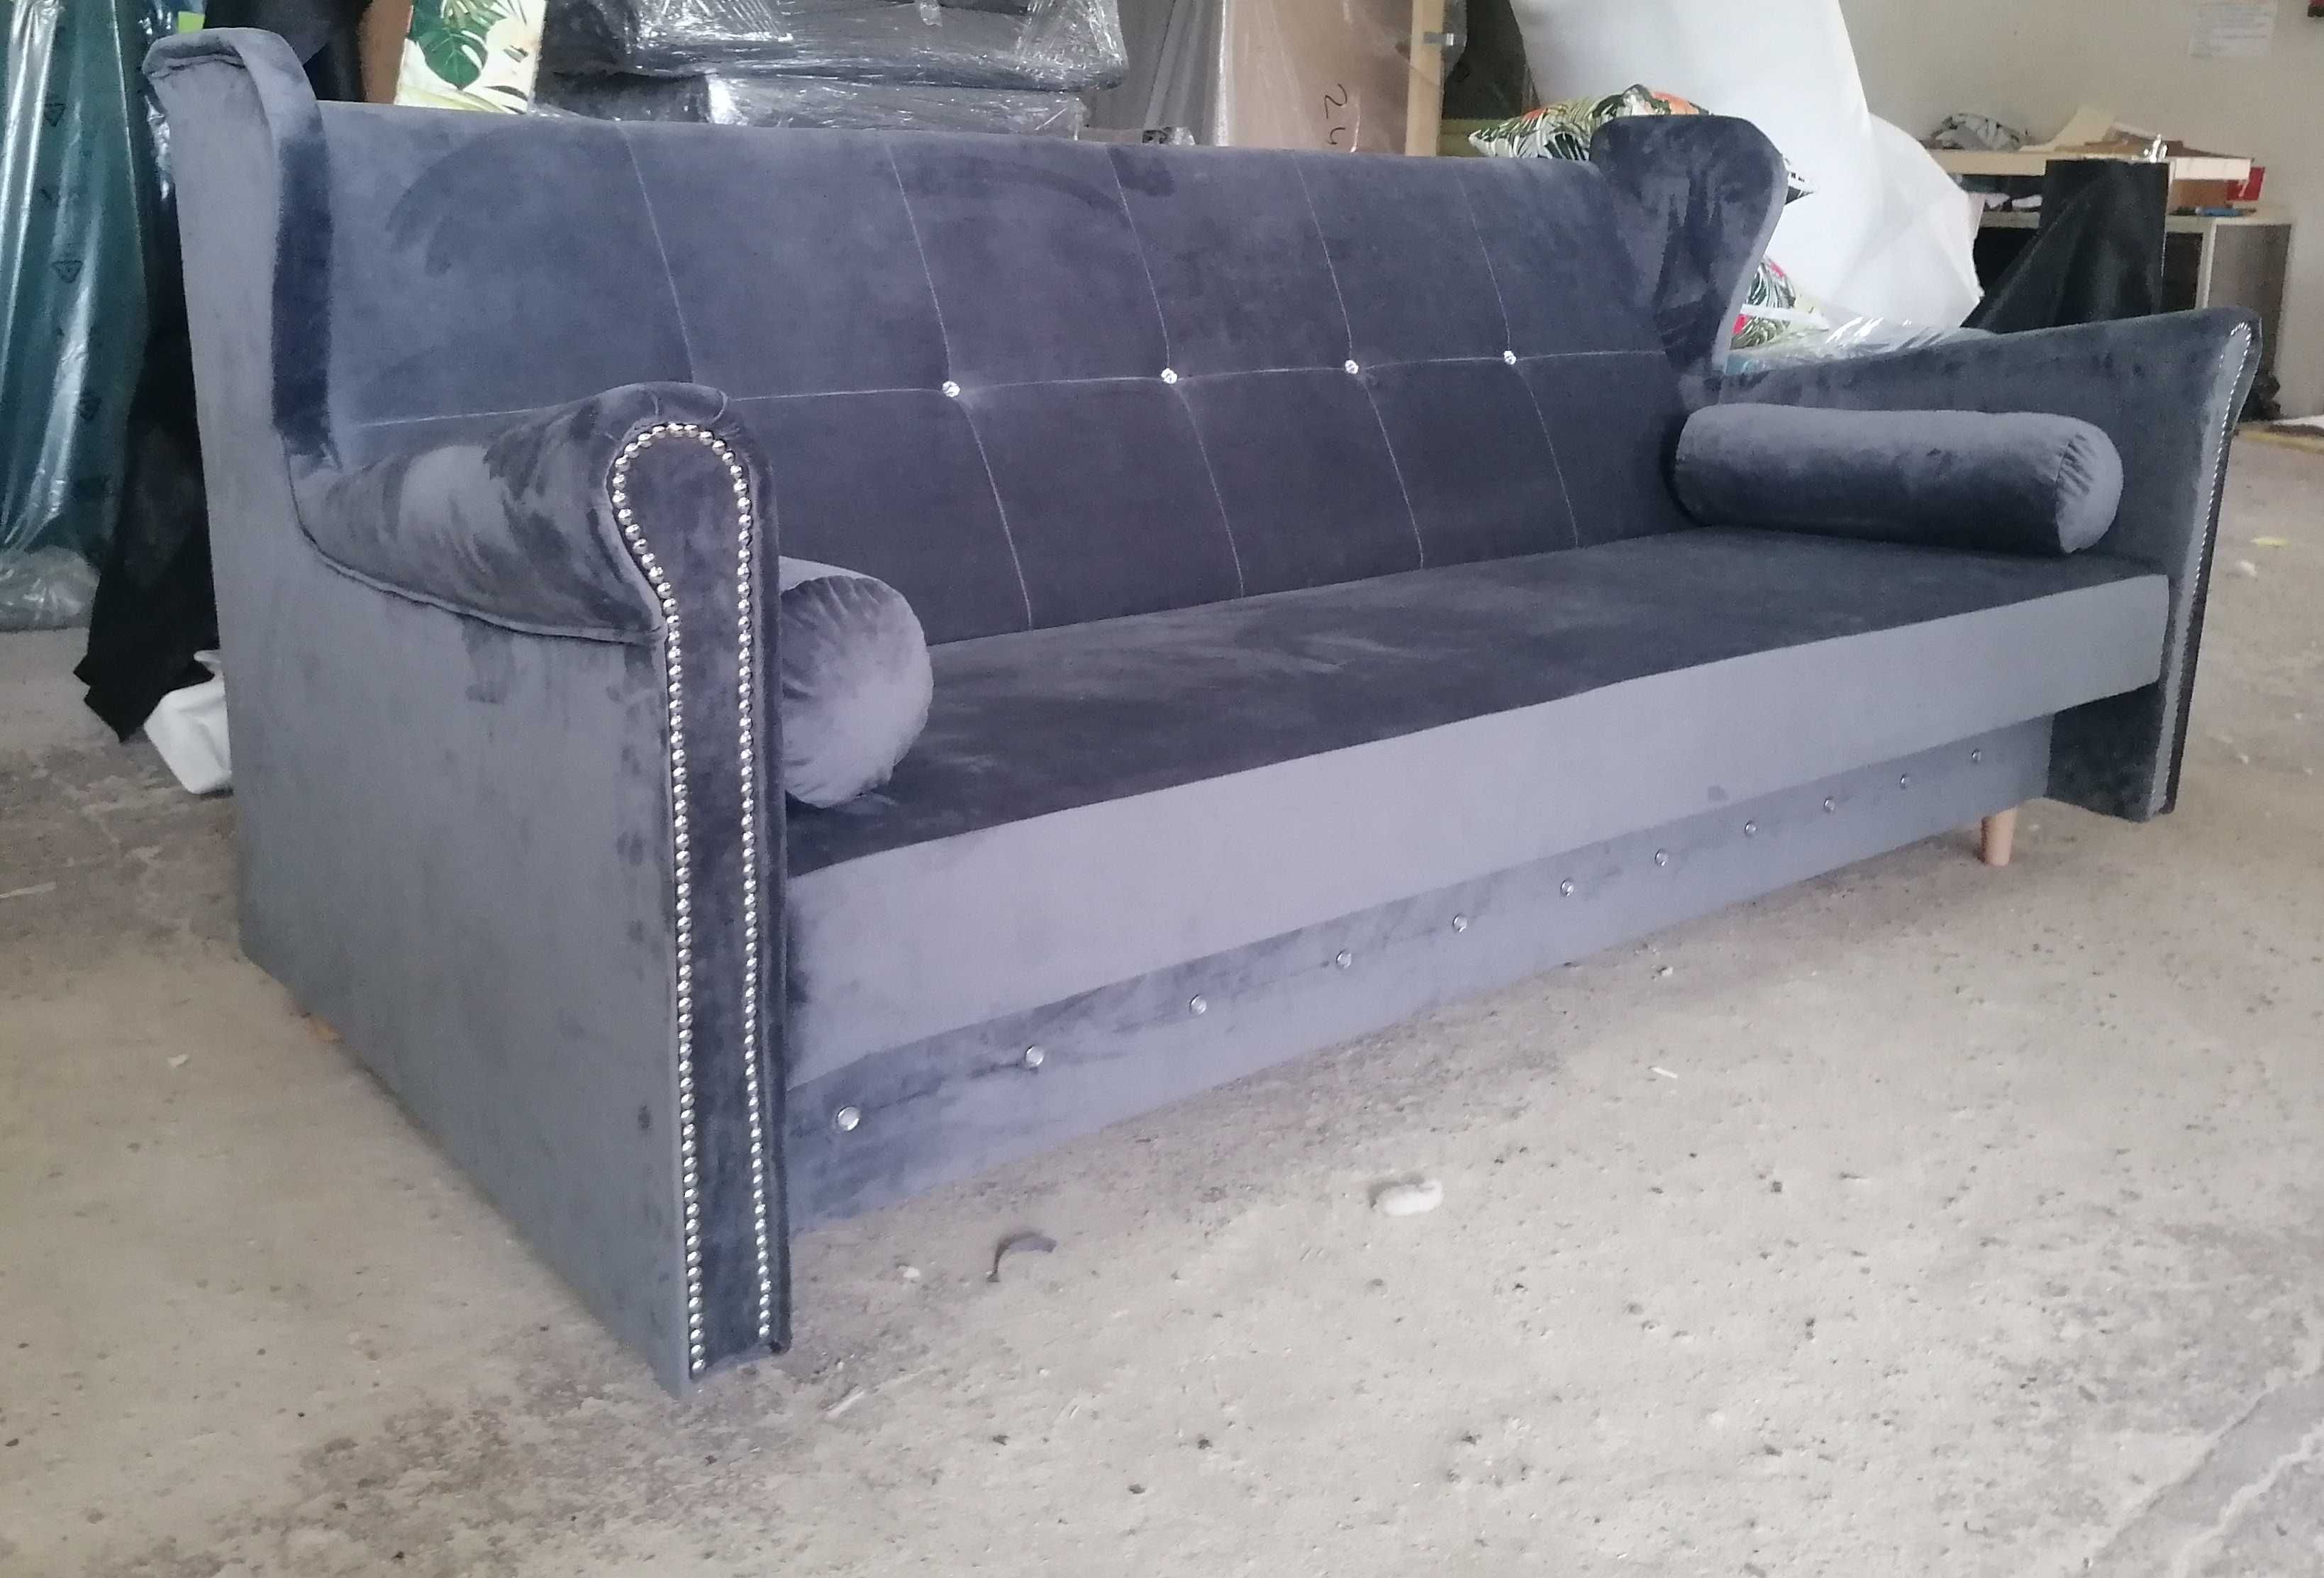 RATY sofa uszak rozkładana kanapa wersalka kryształki pinezka GLAMOUR